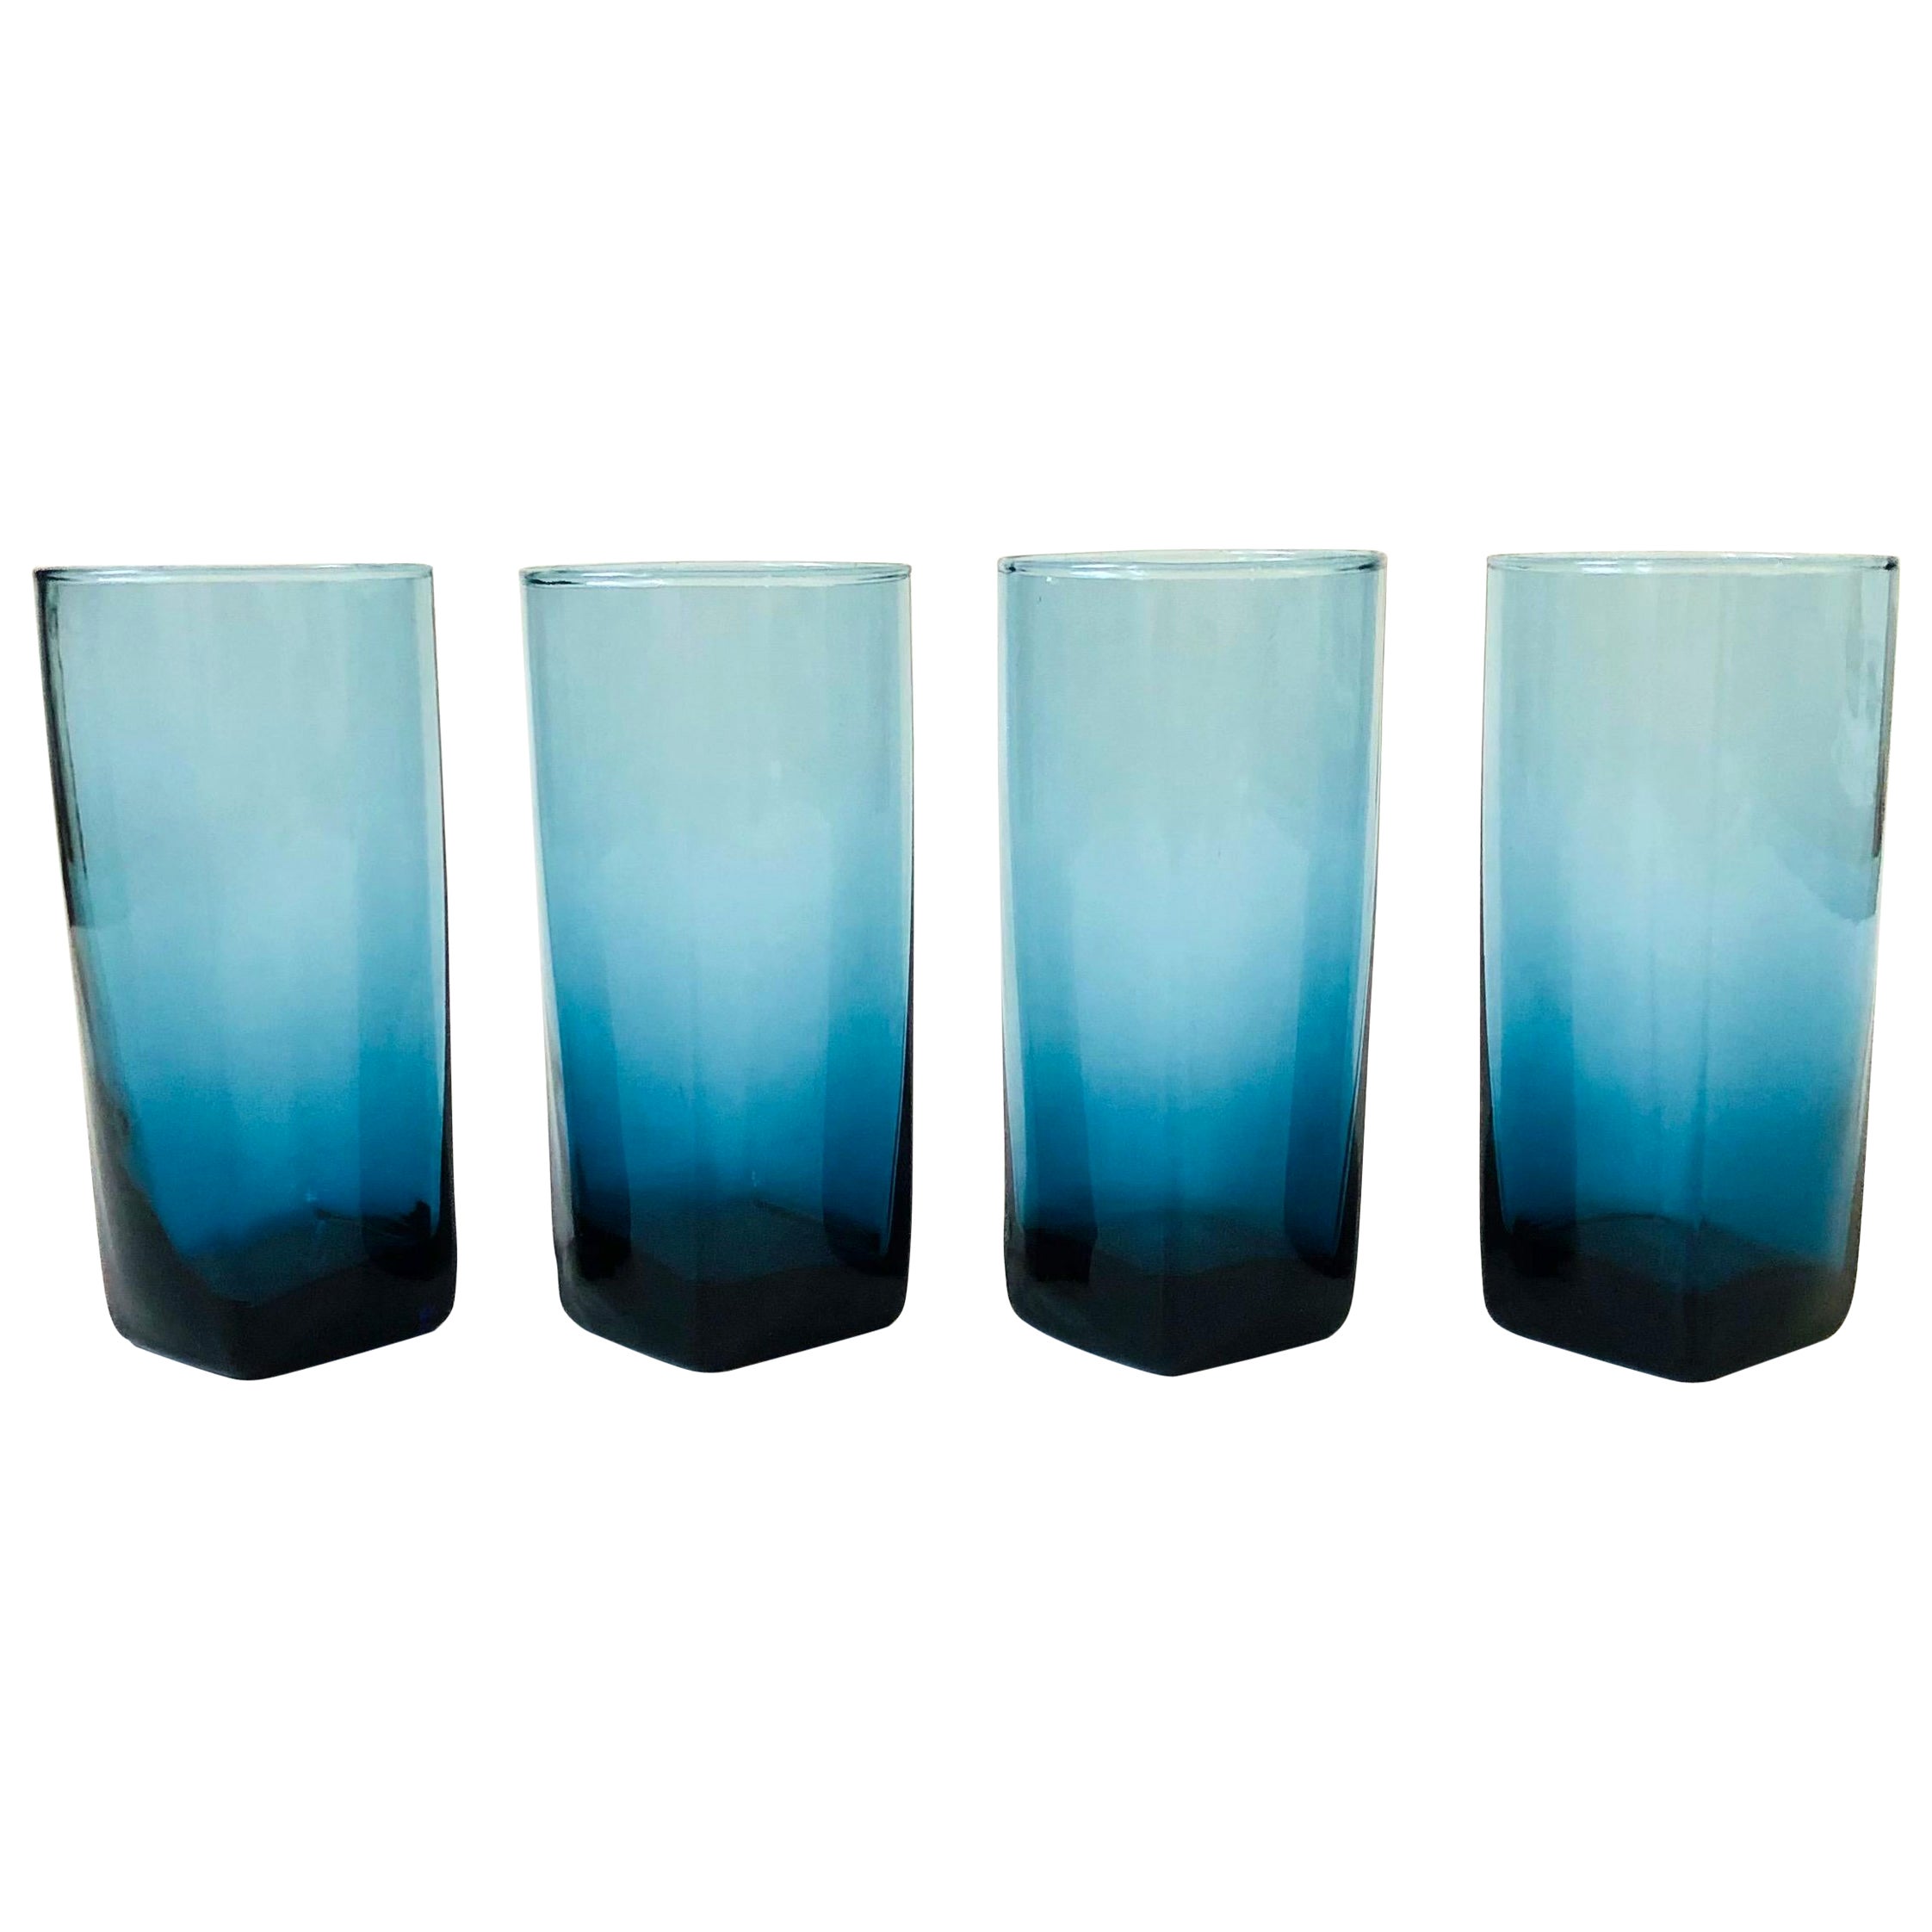 Set of 4 Vintage Squared Blue Tumblers